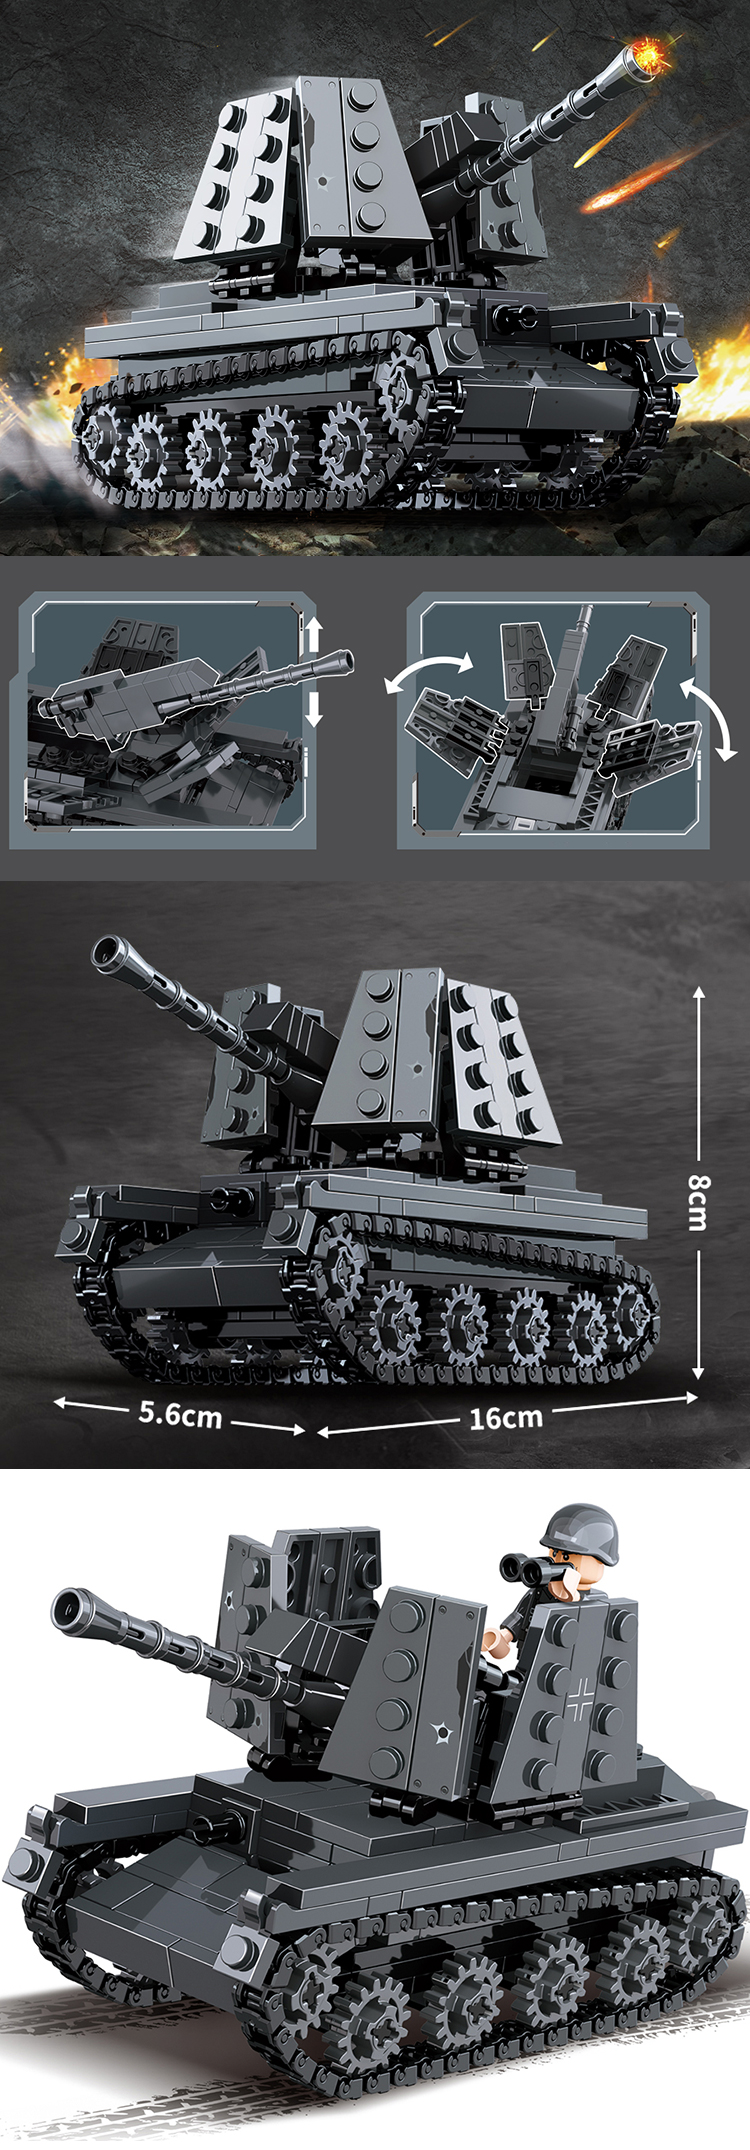 WOMA TOYS Amazon hot sale Gifts Premium military field army battle tank toys model small building blocks bricks set